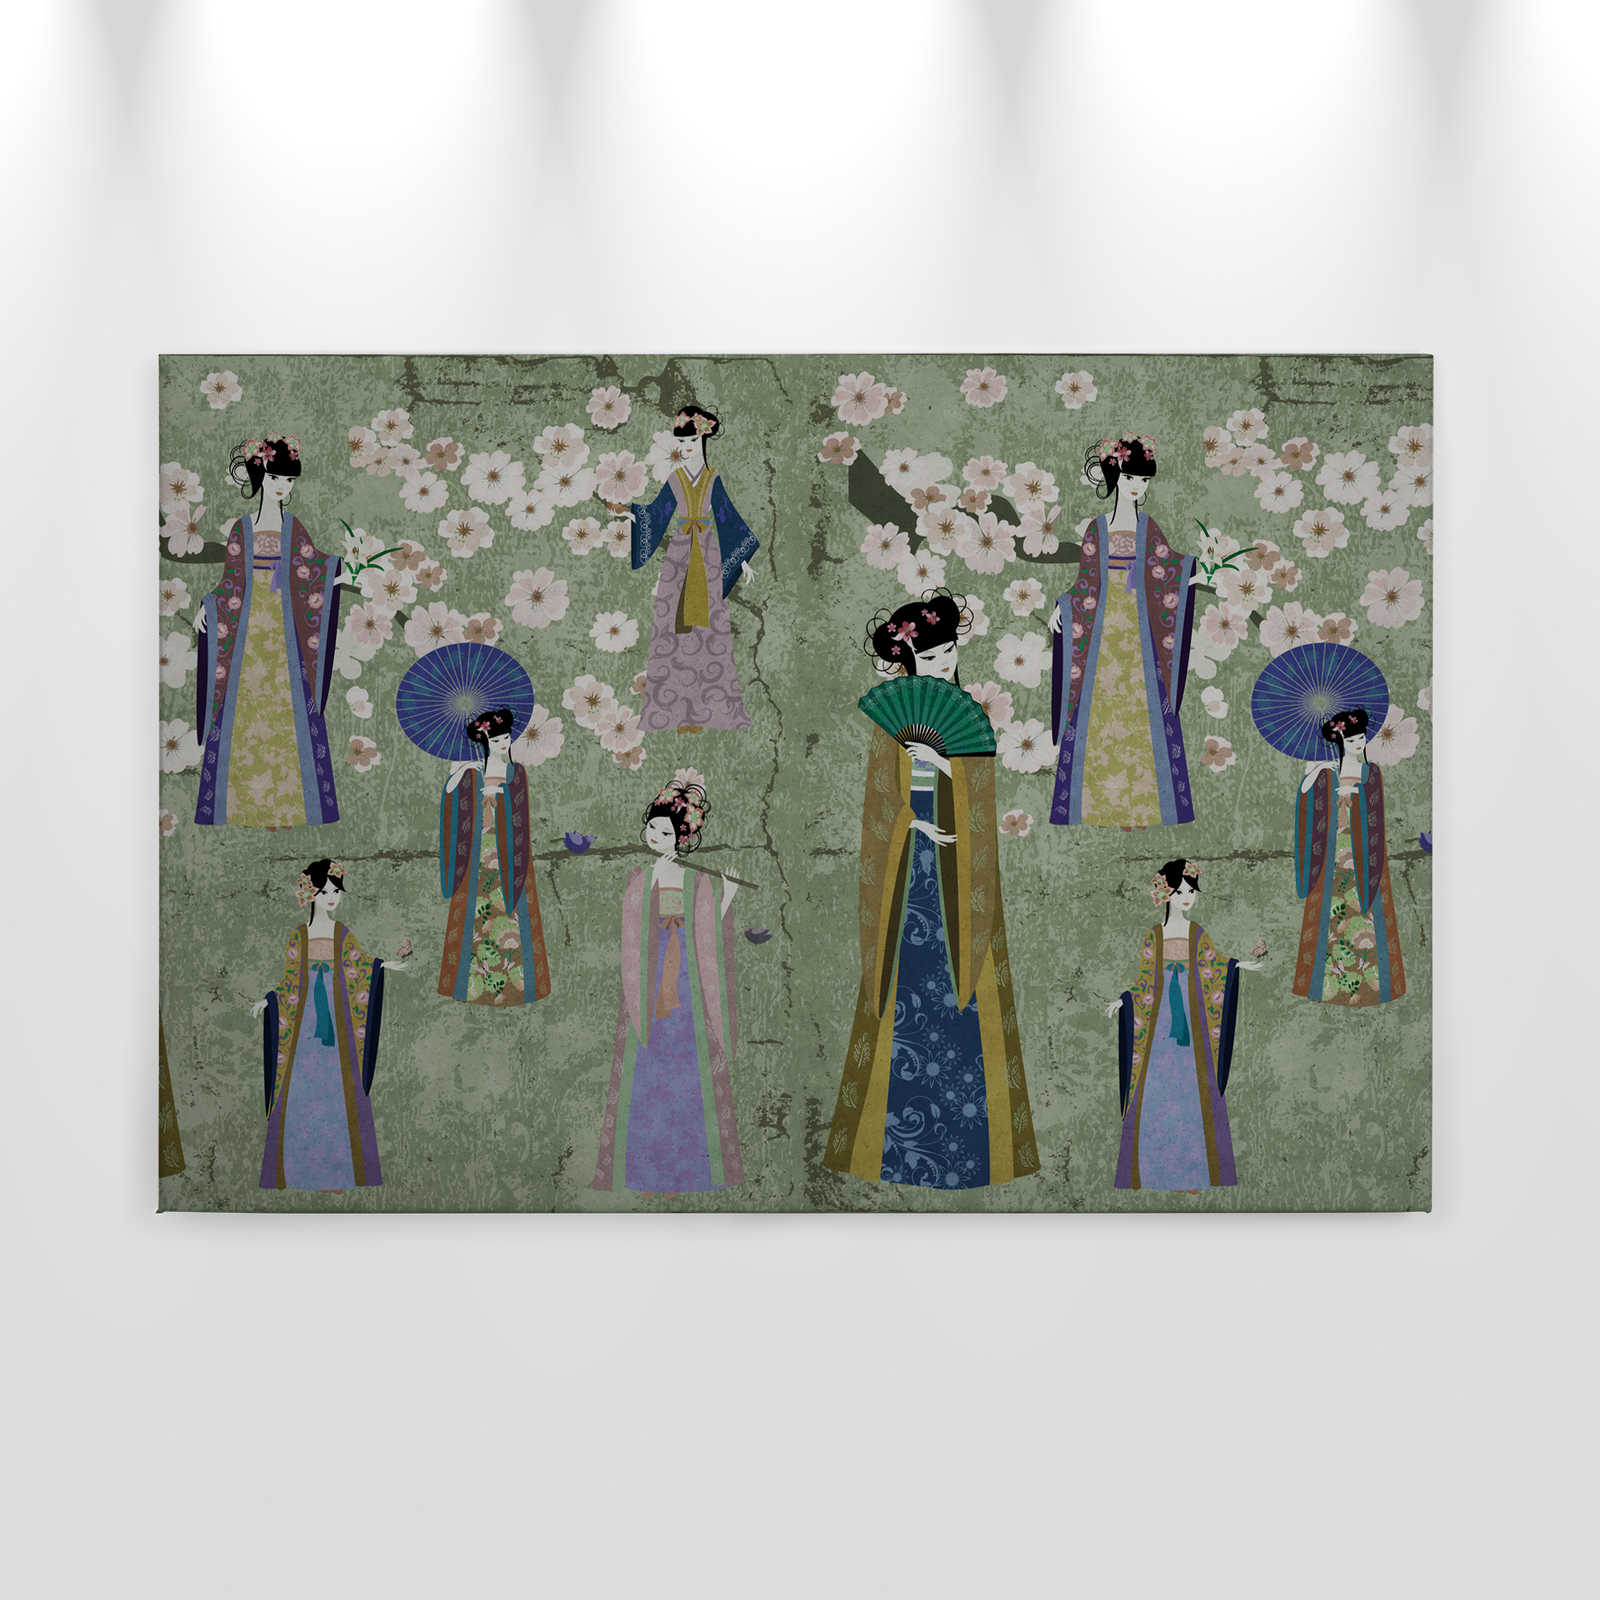             Leinwandbild Japan Comic mit Kirschblüten | grün, blau – 0,90 m x 0,60 m
        